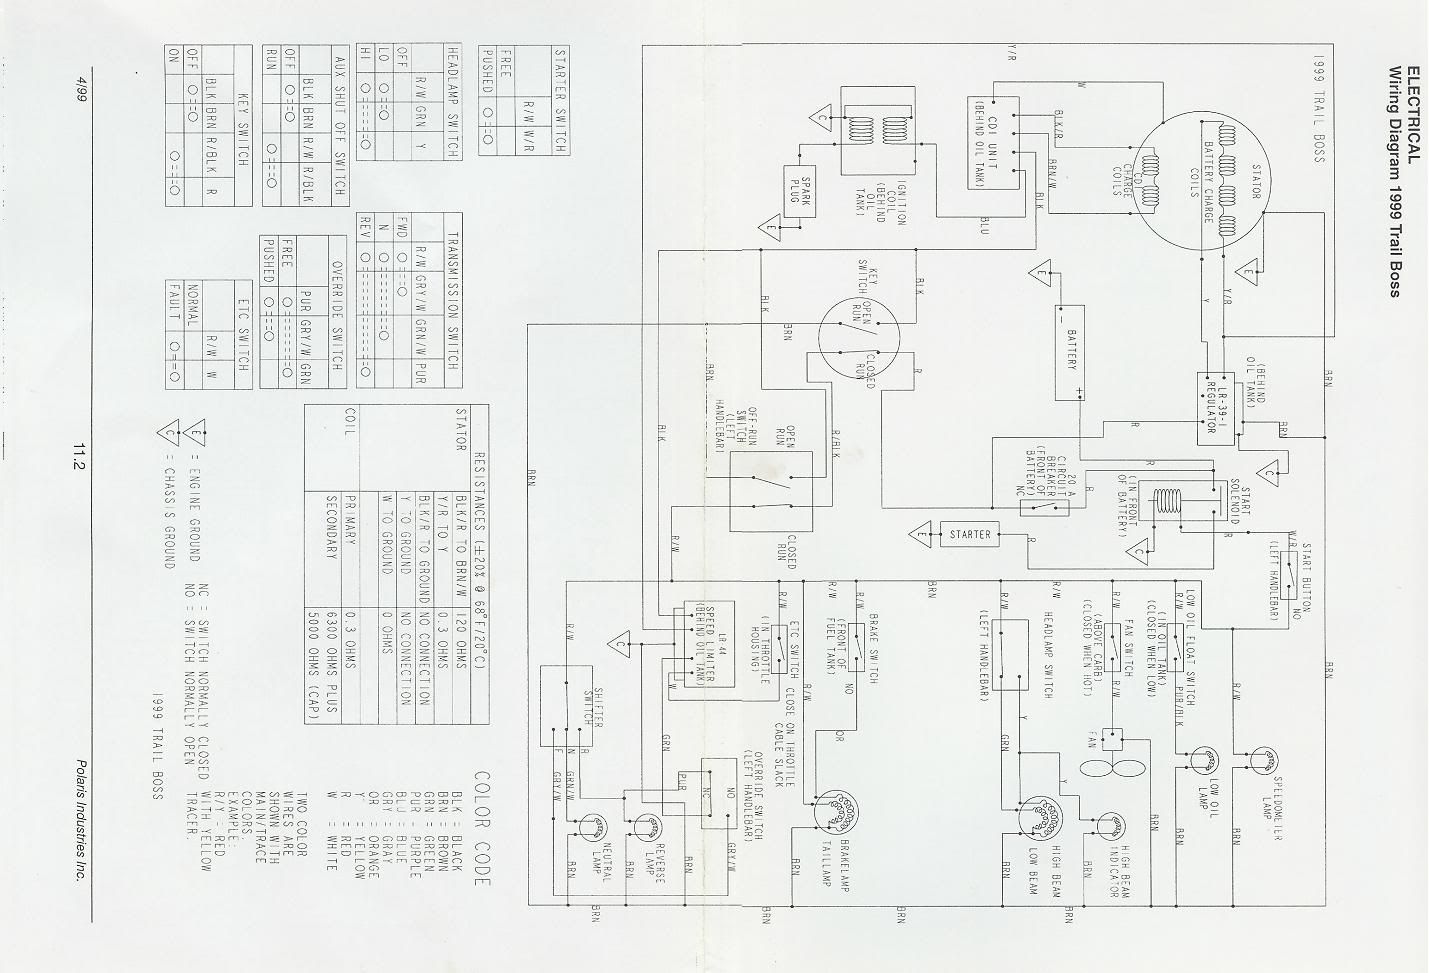 co schematics polaris trail boss wiring diagram